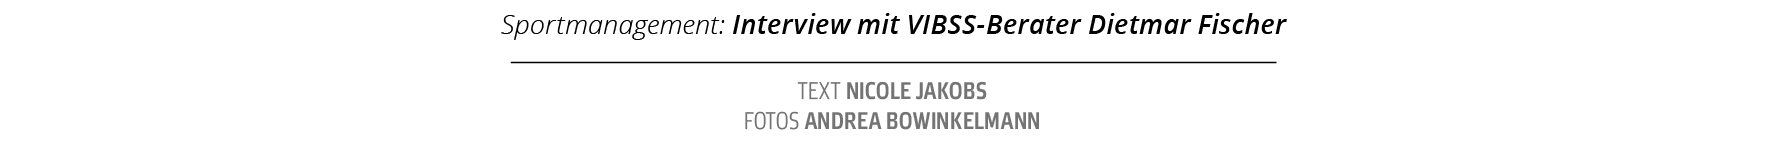 Text nicole jakobs fotos Andrea Bowinkelmann,Sportmanagement: Interview mit VIBSS-Berater Dietmar Fische